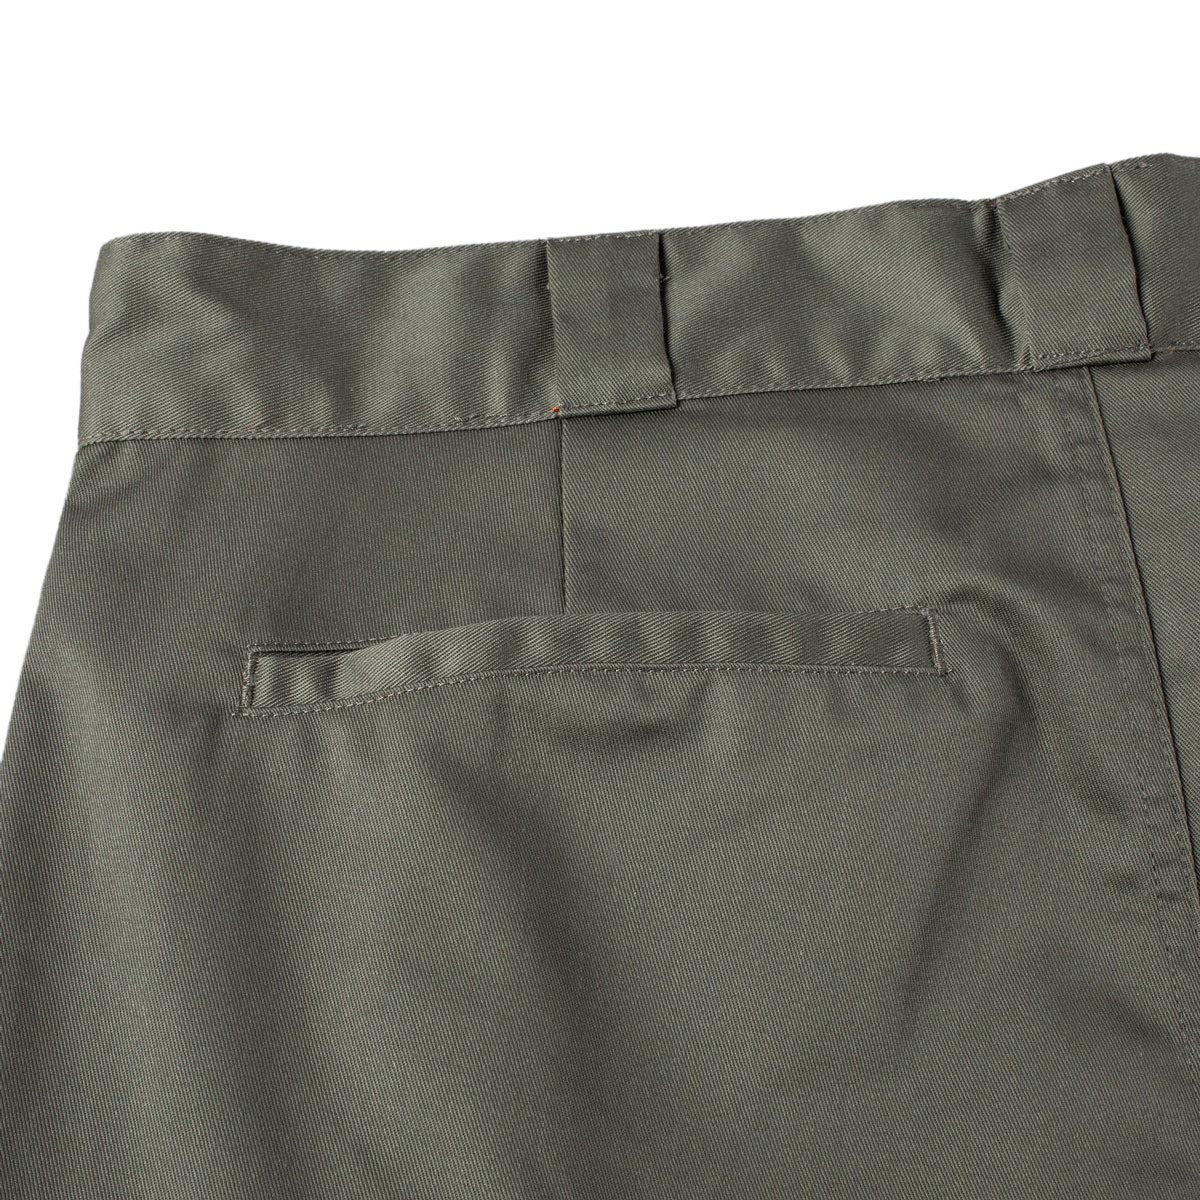 Metal Jersey Chino Pants - Olive image 4